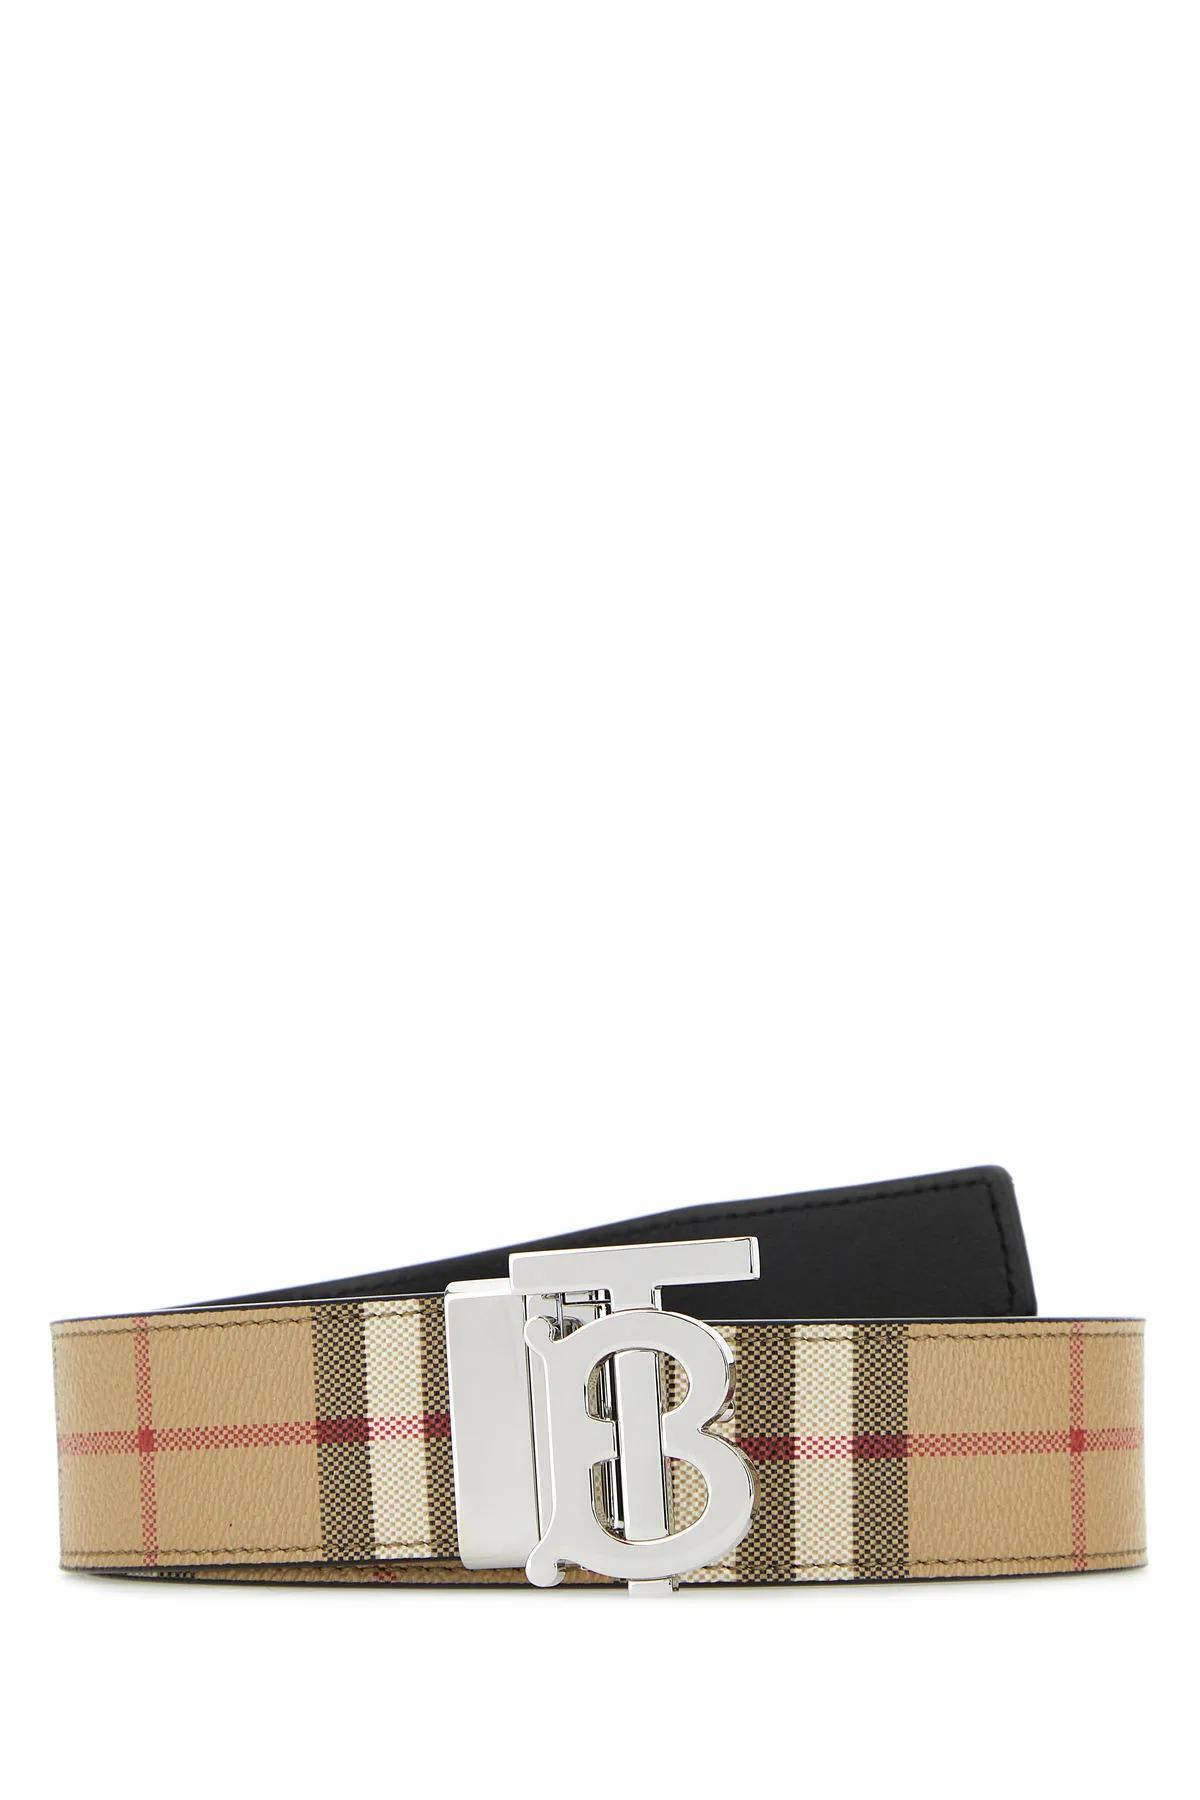 Burberry Vintage Check Reversible Monogram-Buckle Belt - Brown